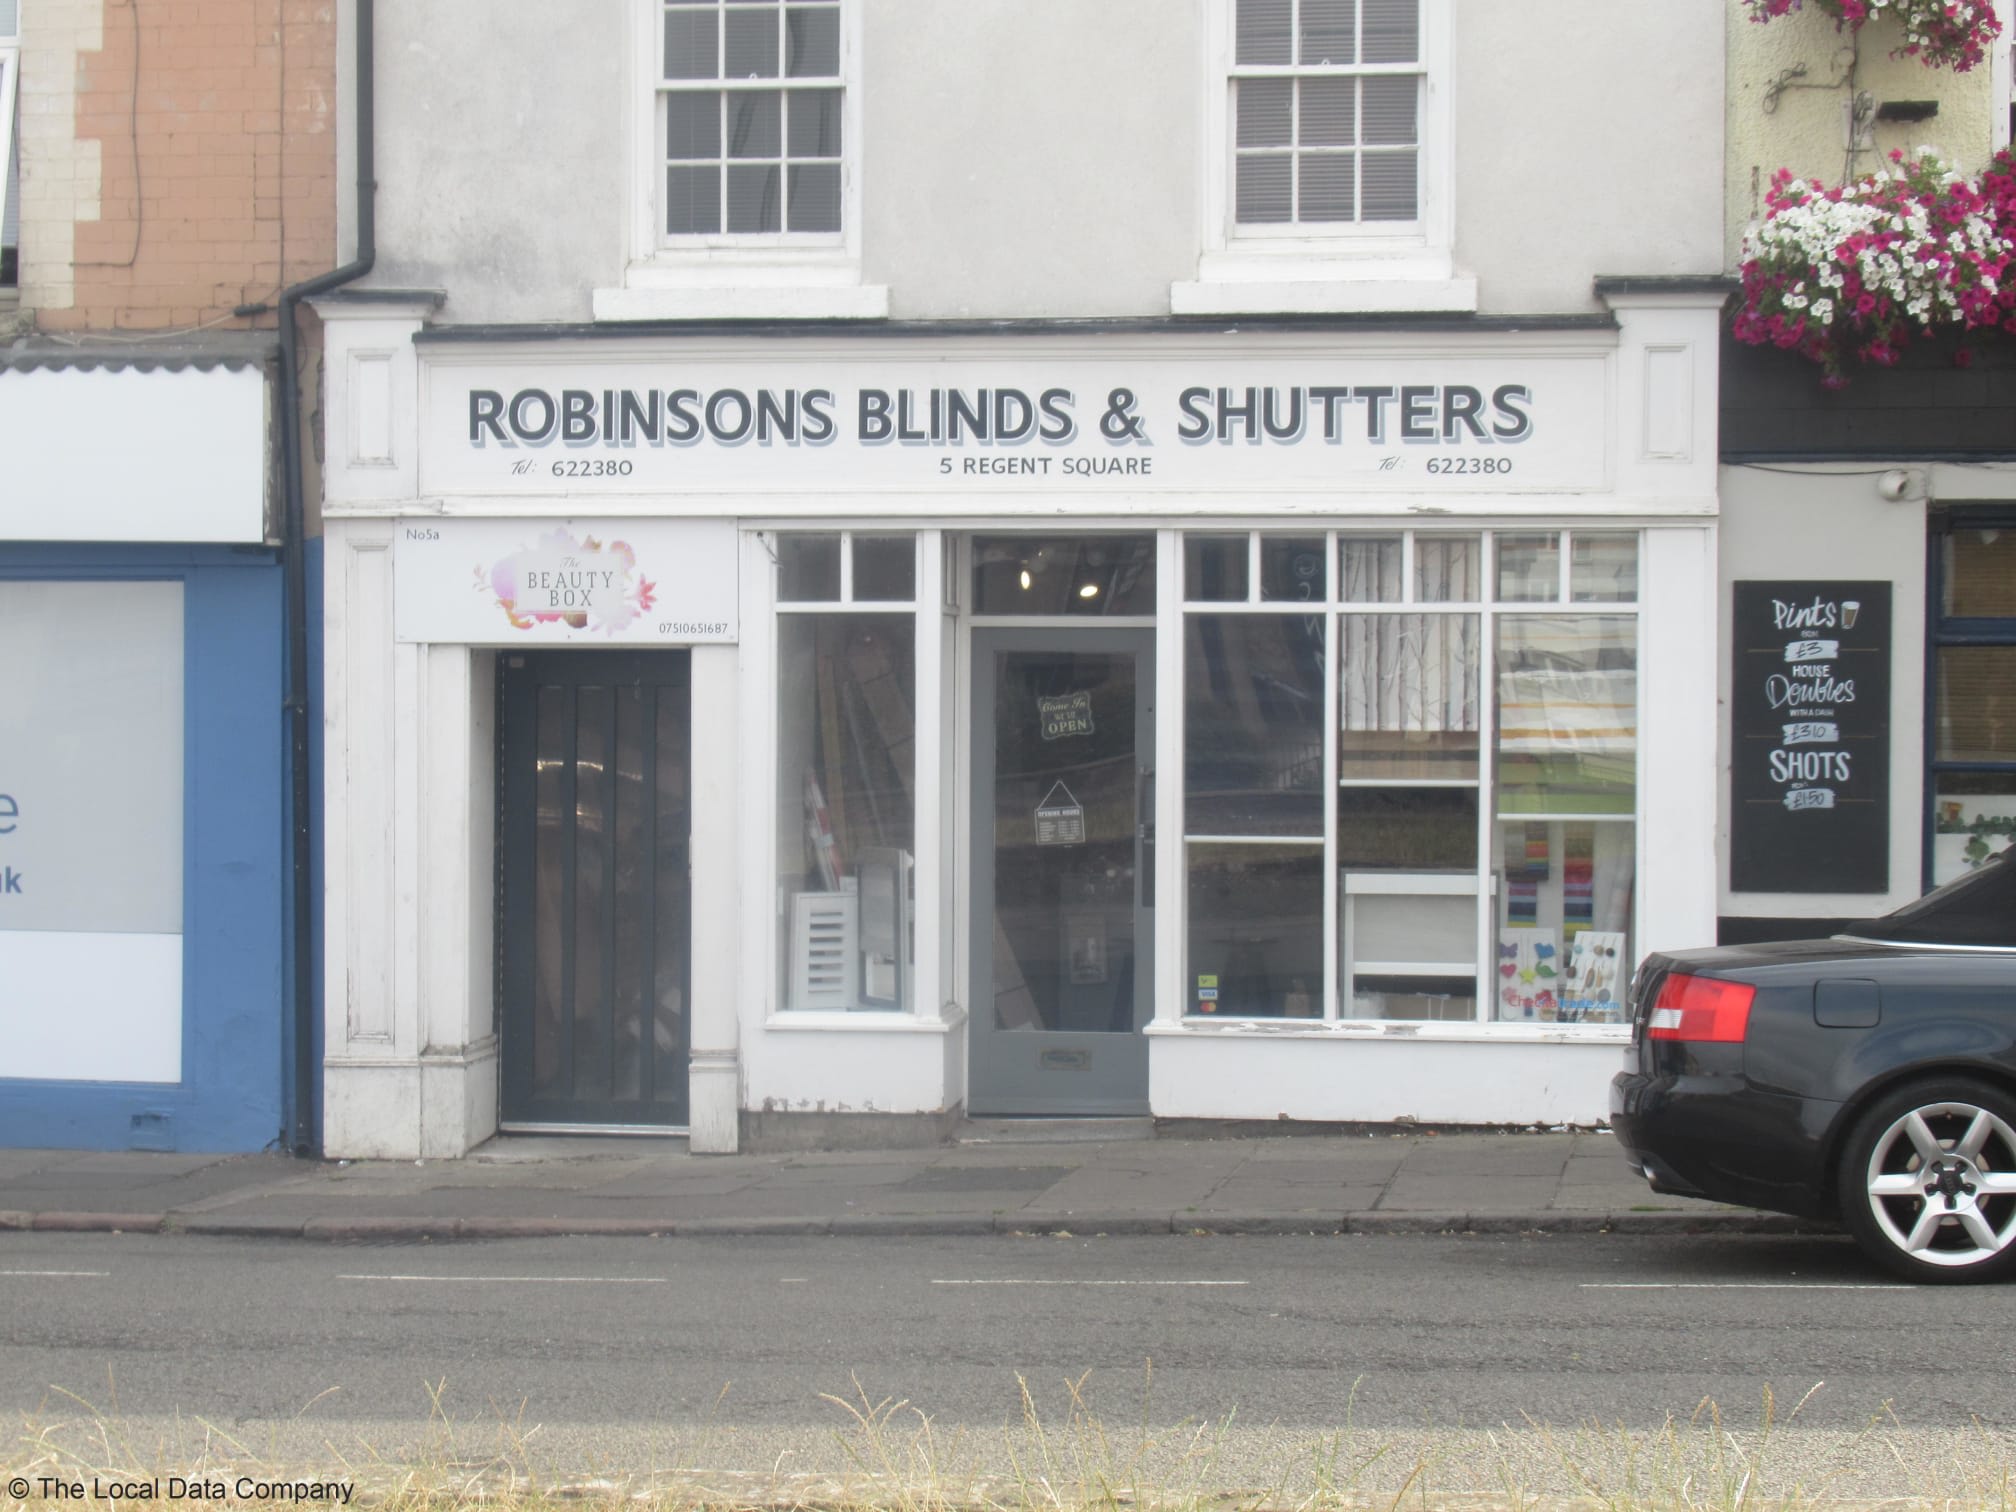 Robinsons Blinds & Shutters Northampton 01604 622380